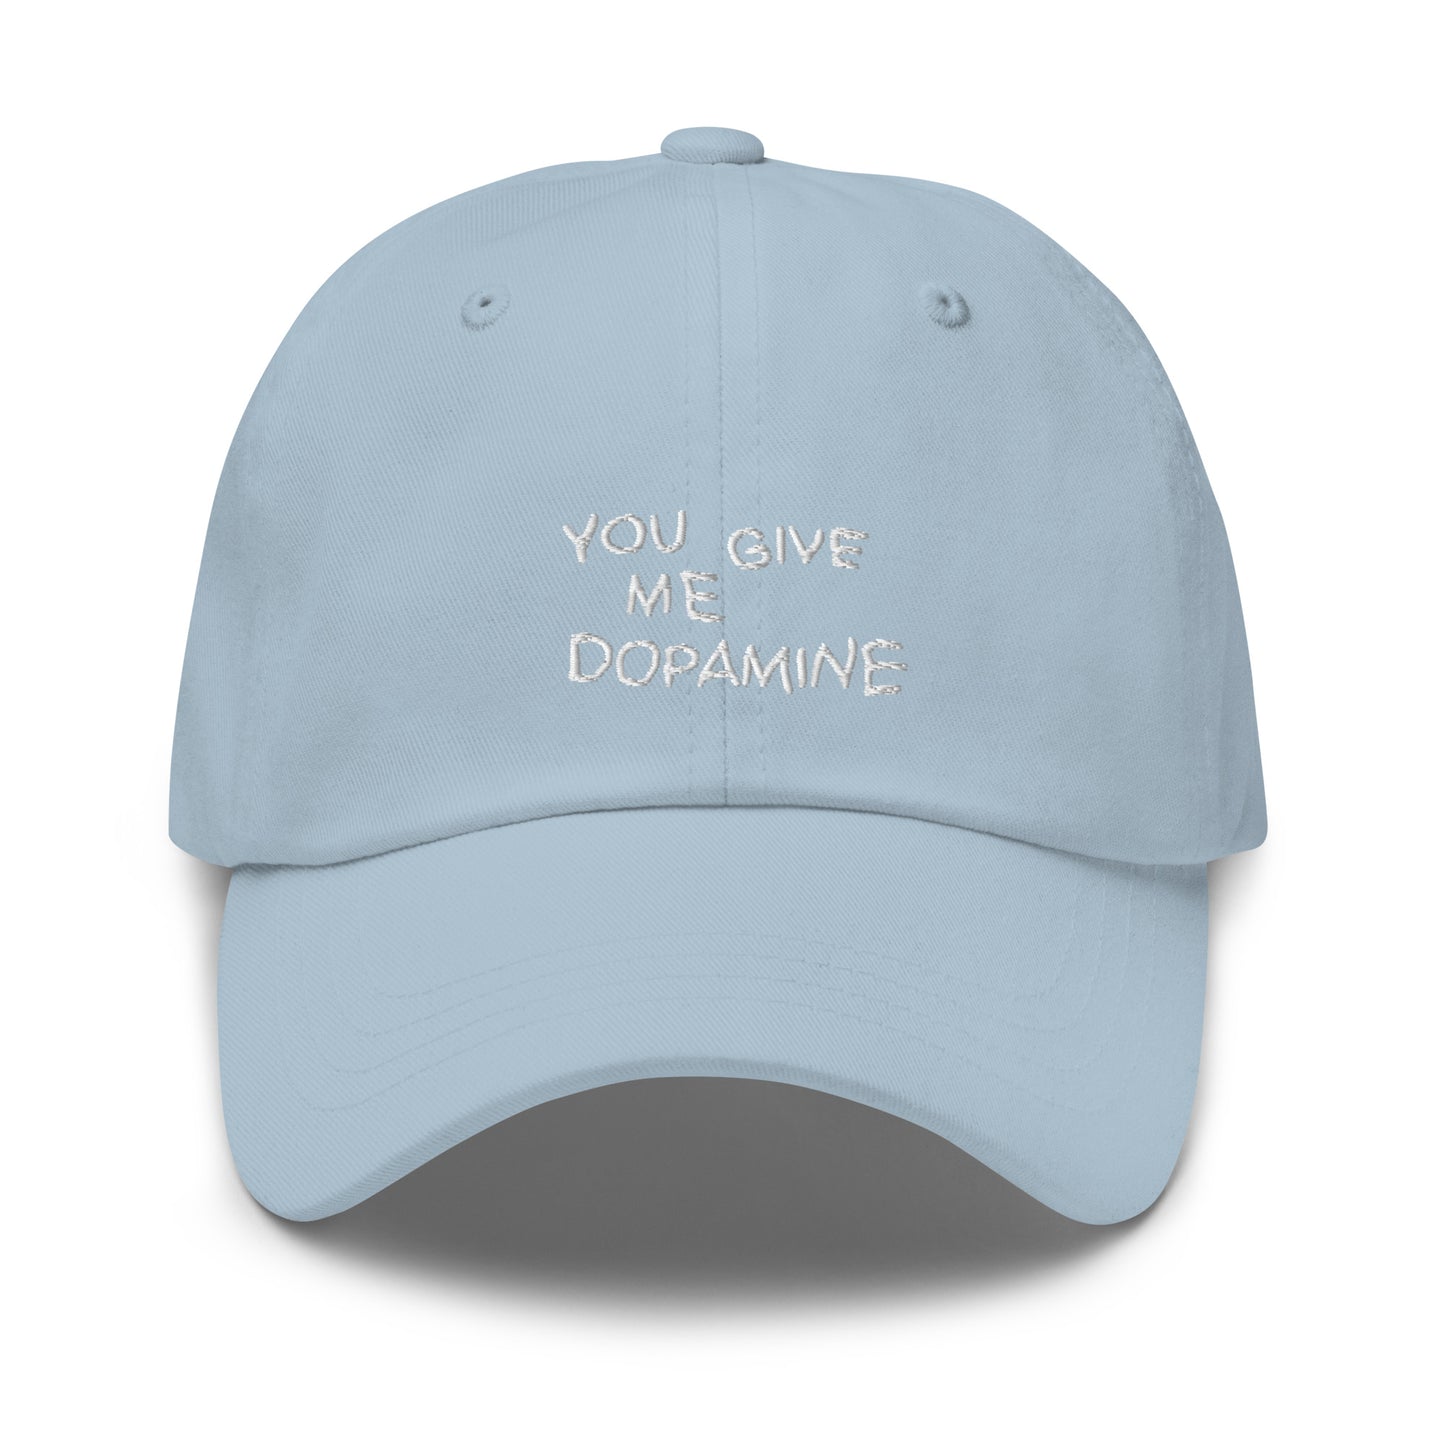 Dopamine hat in blush